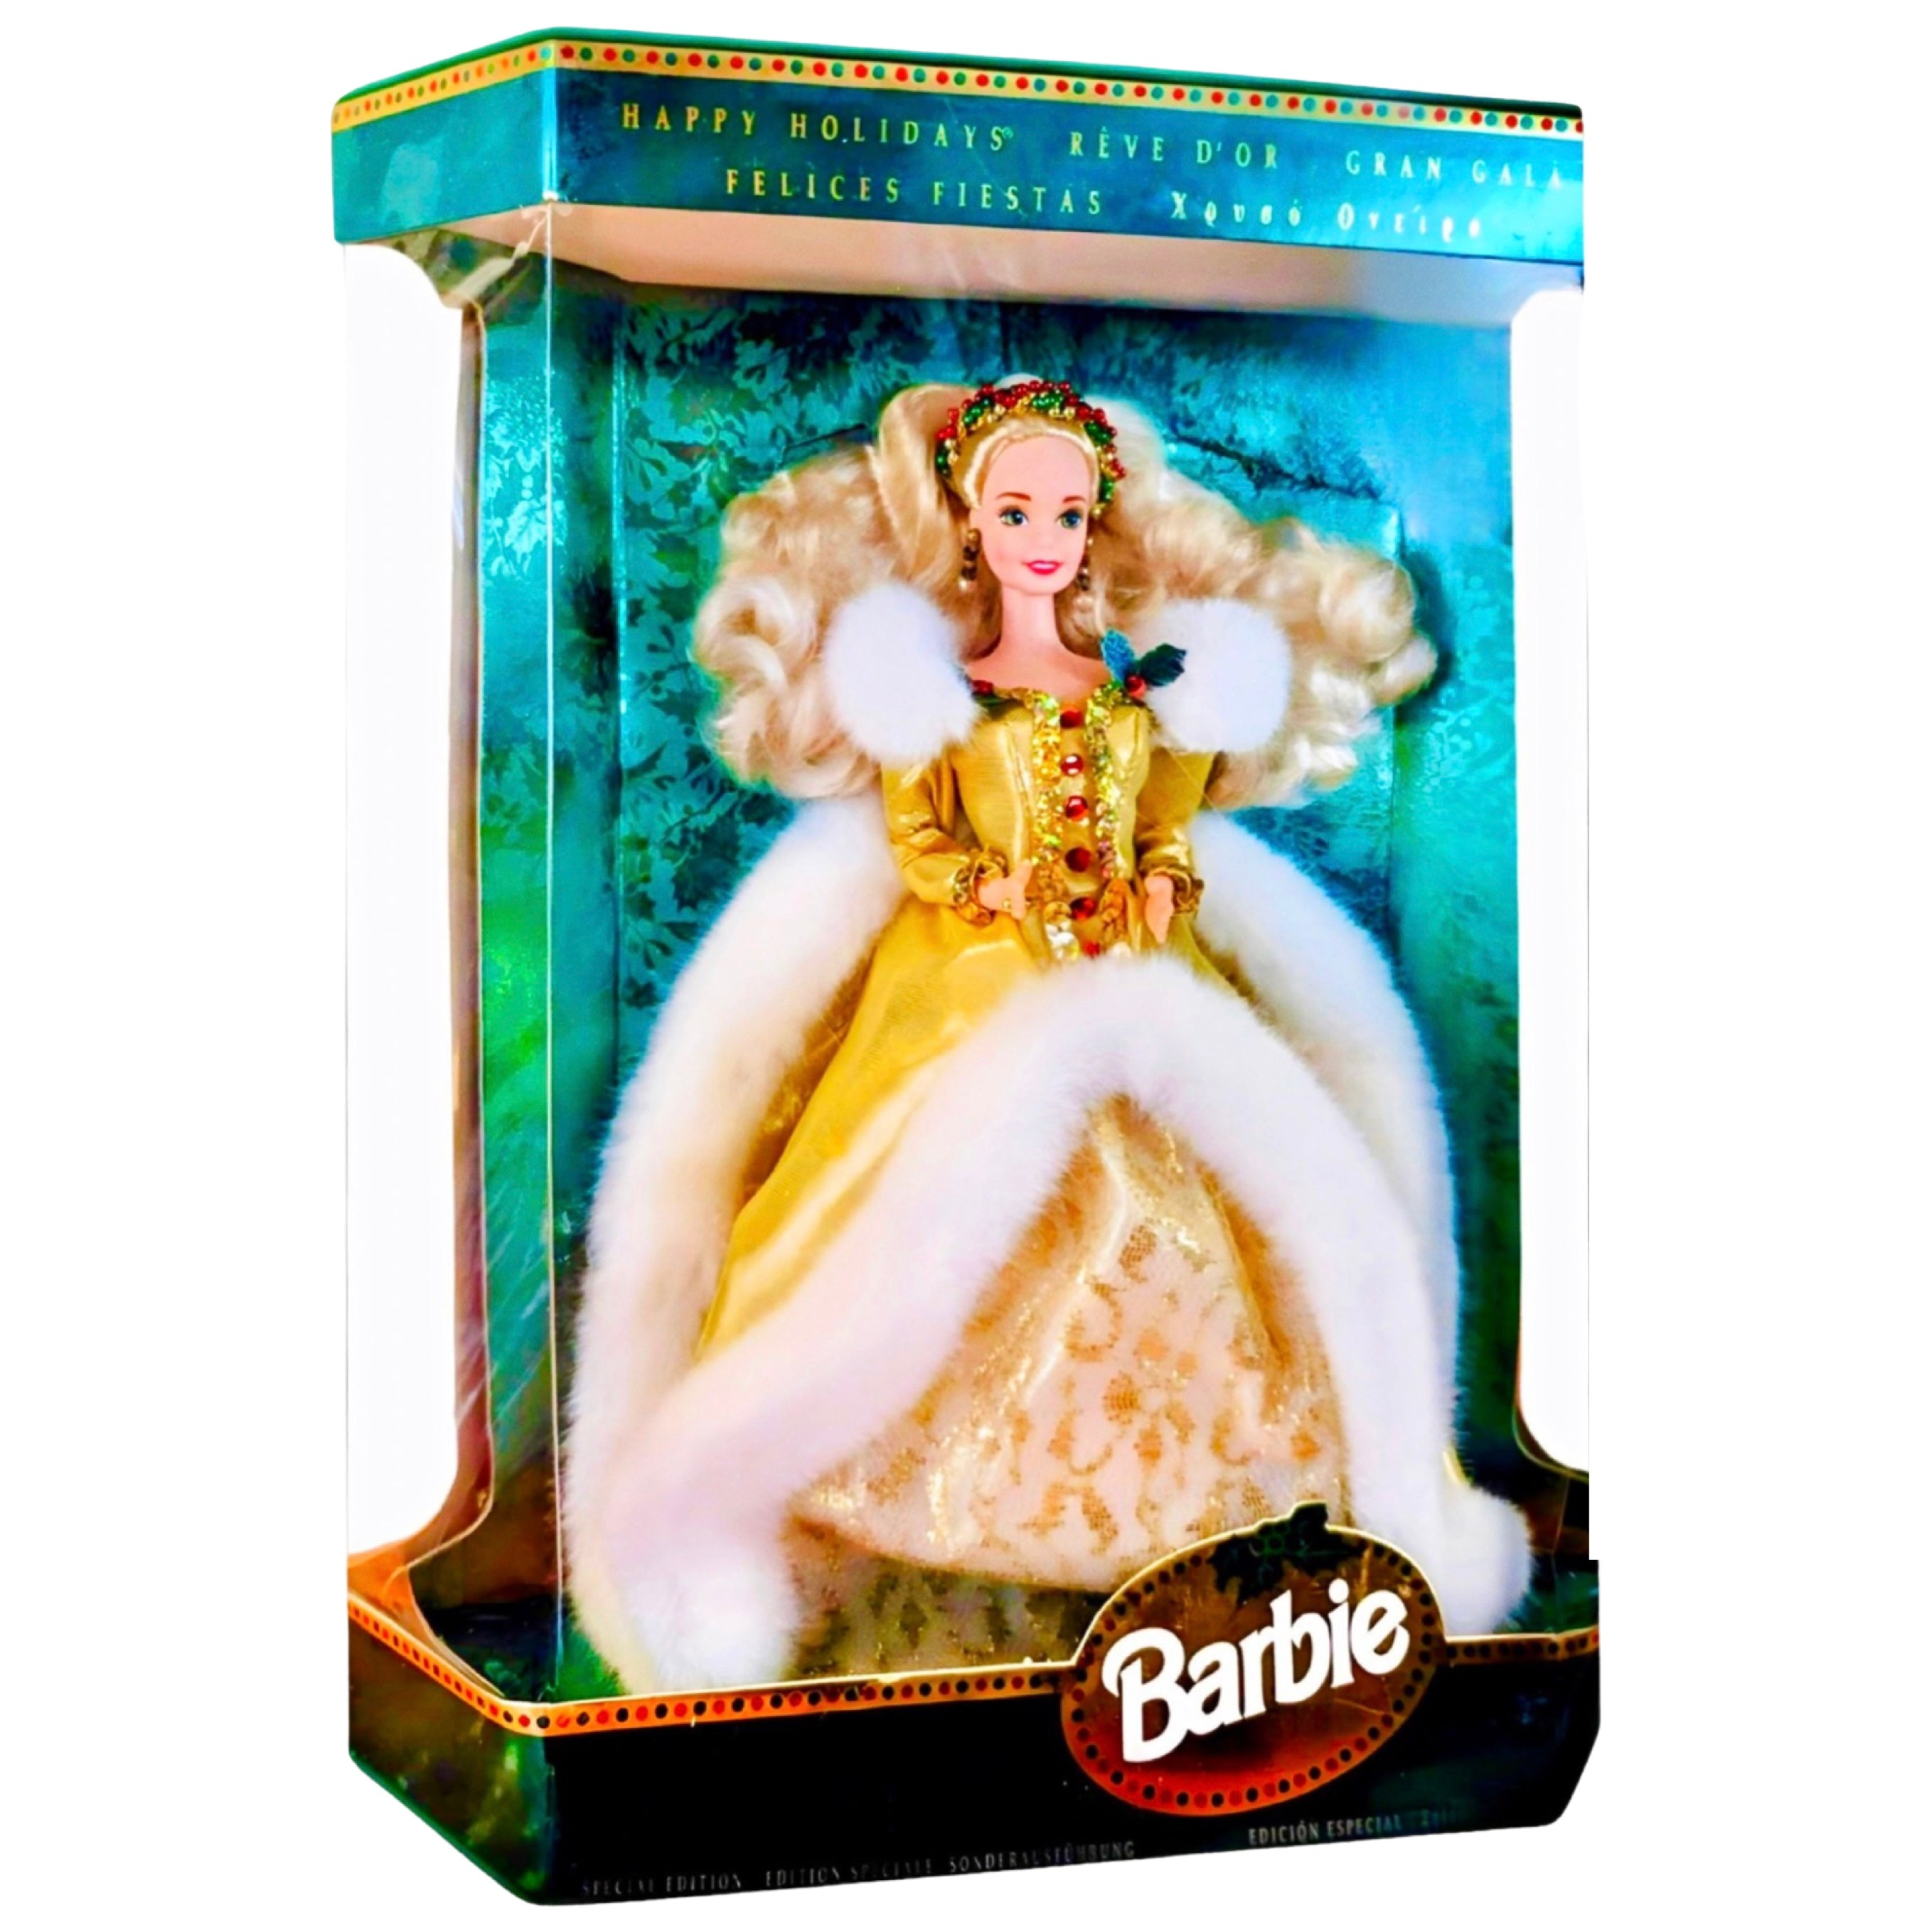 Happy Holidays Special Edition Barbie #12155